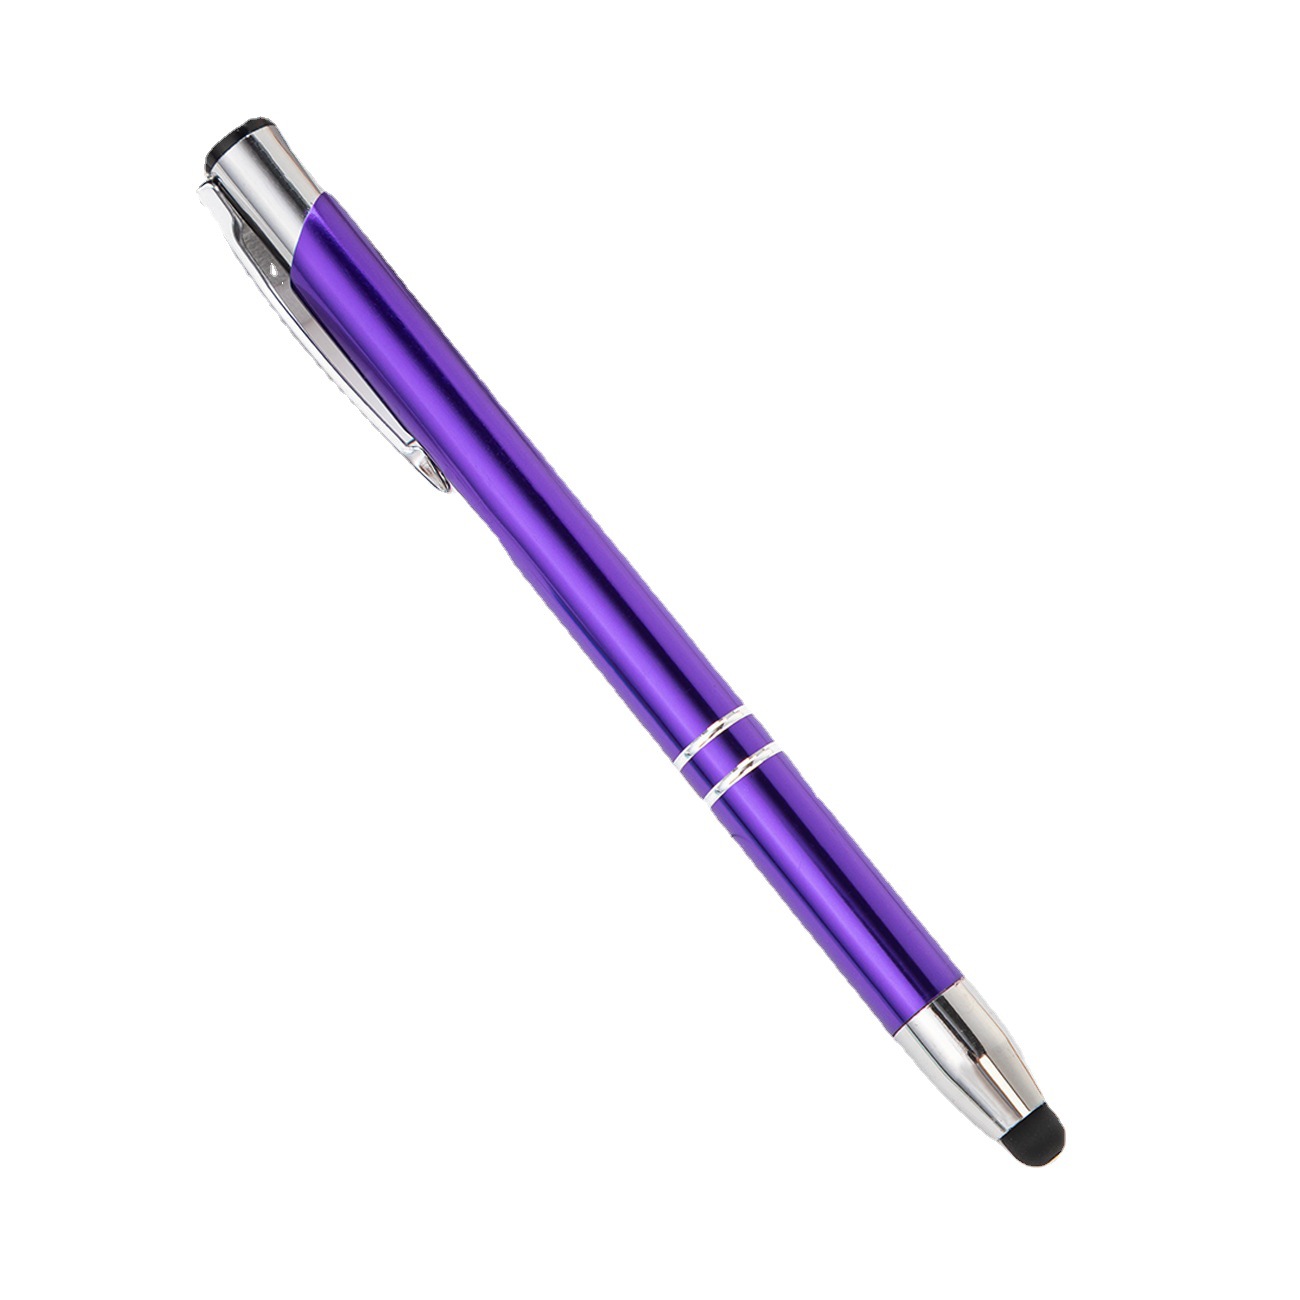 OS-0224 engraved aluminum stylus pens